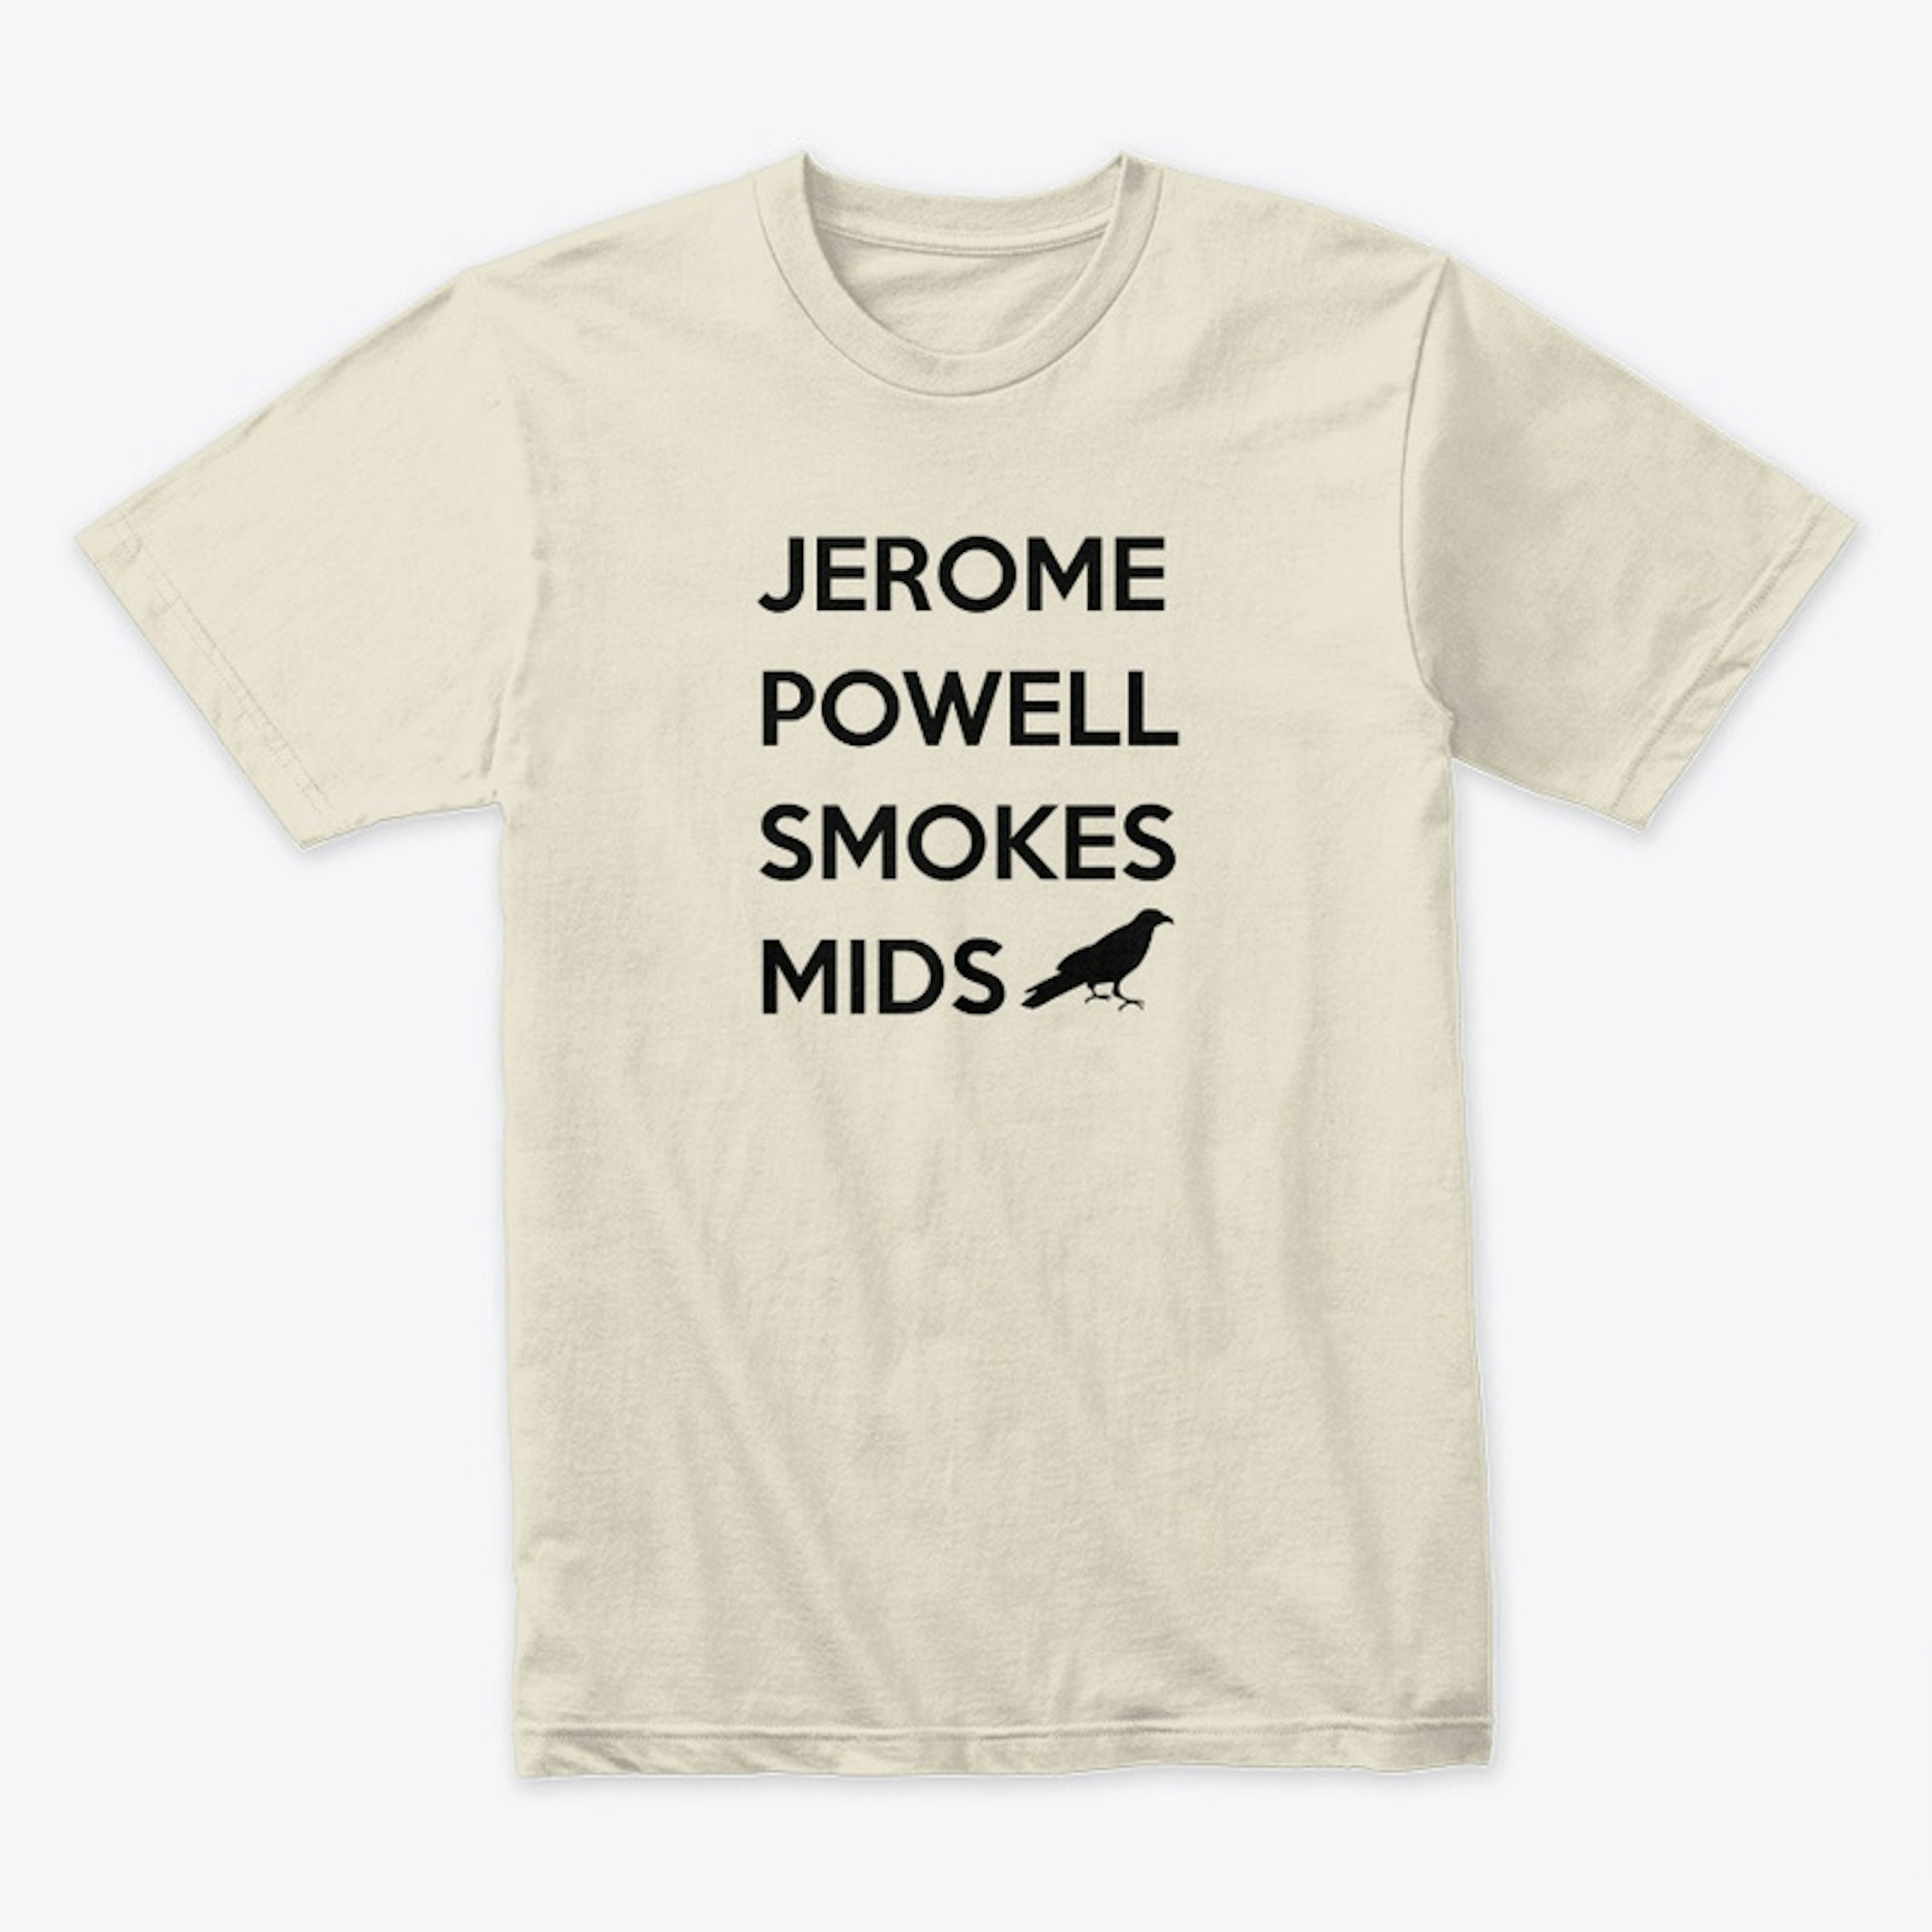 The Mids T-Shirt